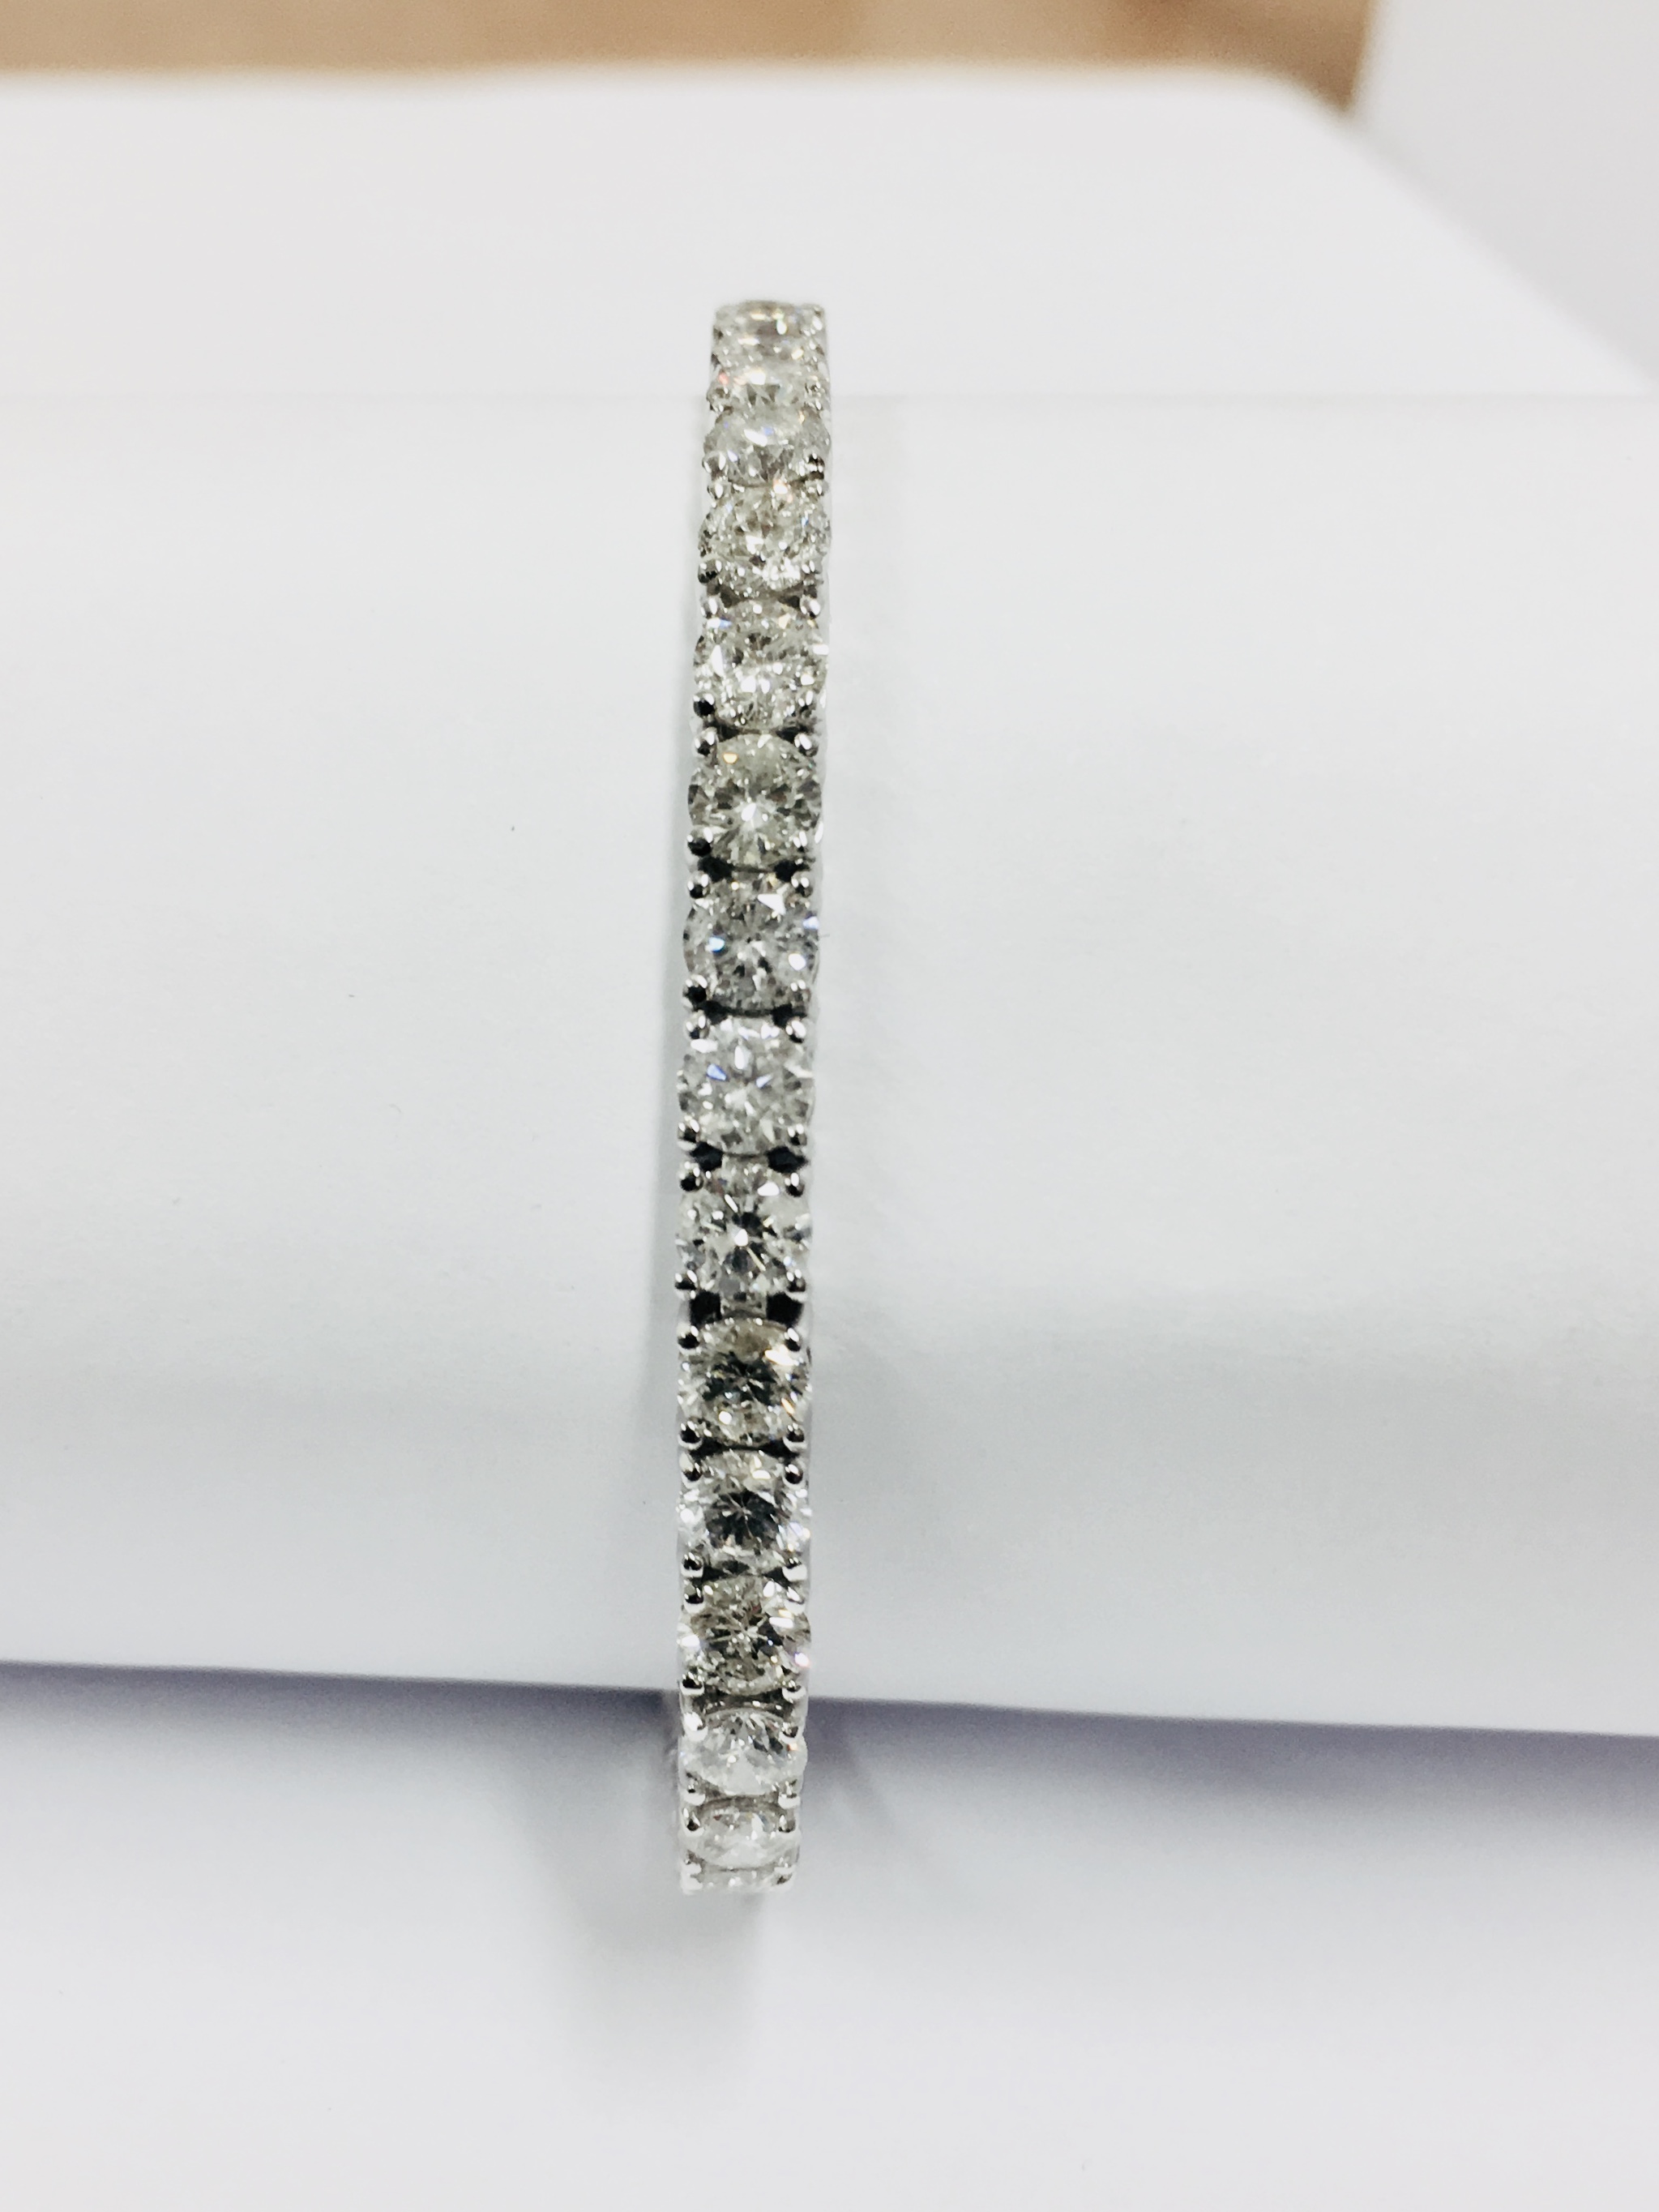 8.00ct Diamond tennis bracelet set with brilliant cut diamonds of G colour - Image 8 of 42